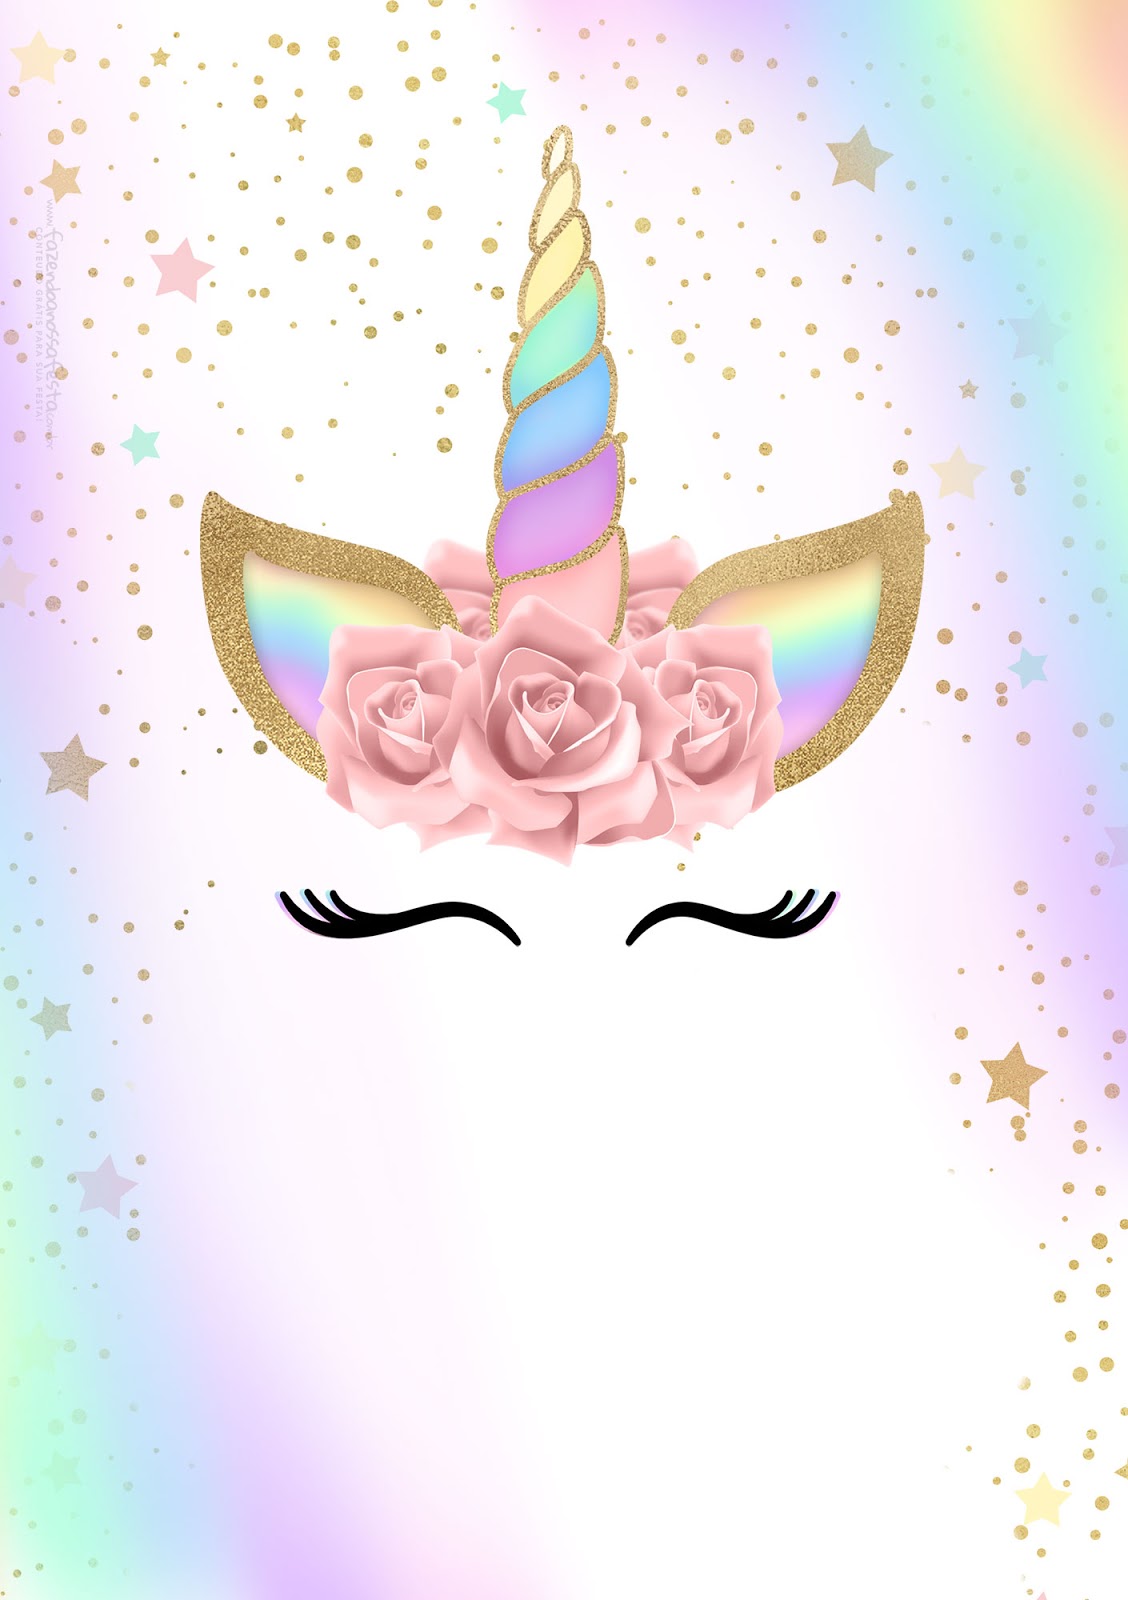 Unicorn with Rainbow: Free Printable Invitations. - Oh My Fiesta! in english